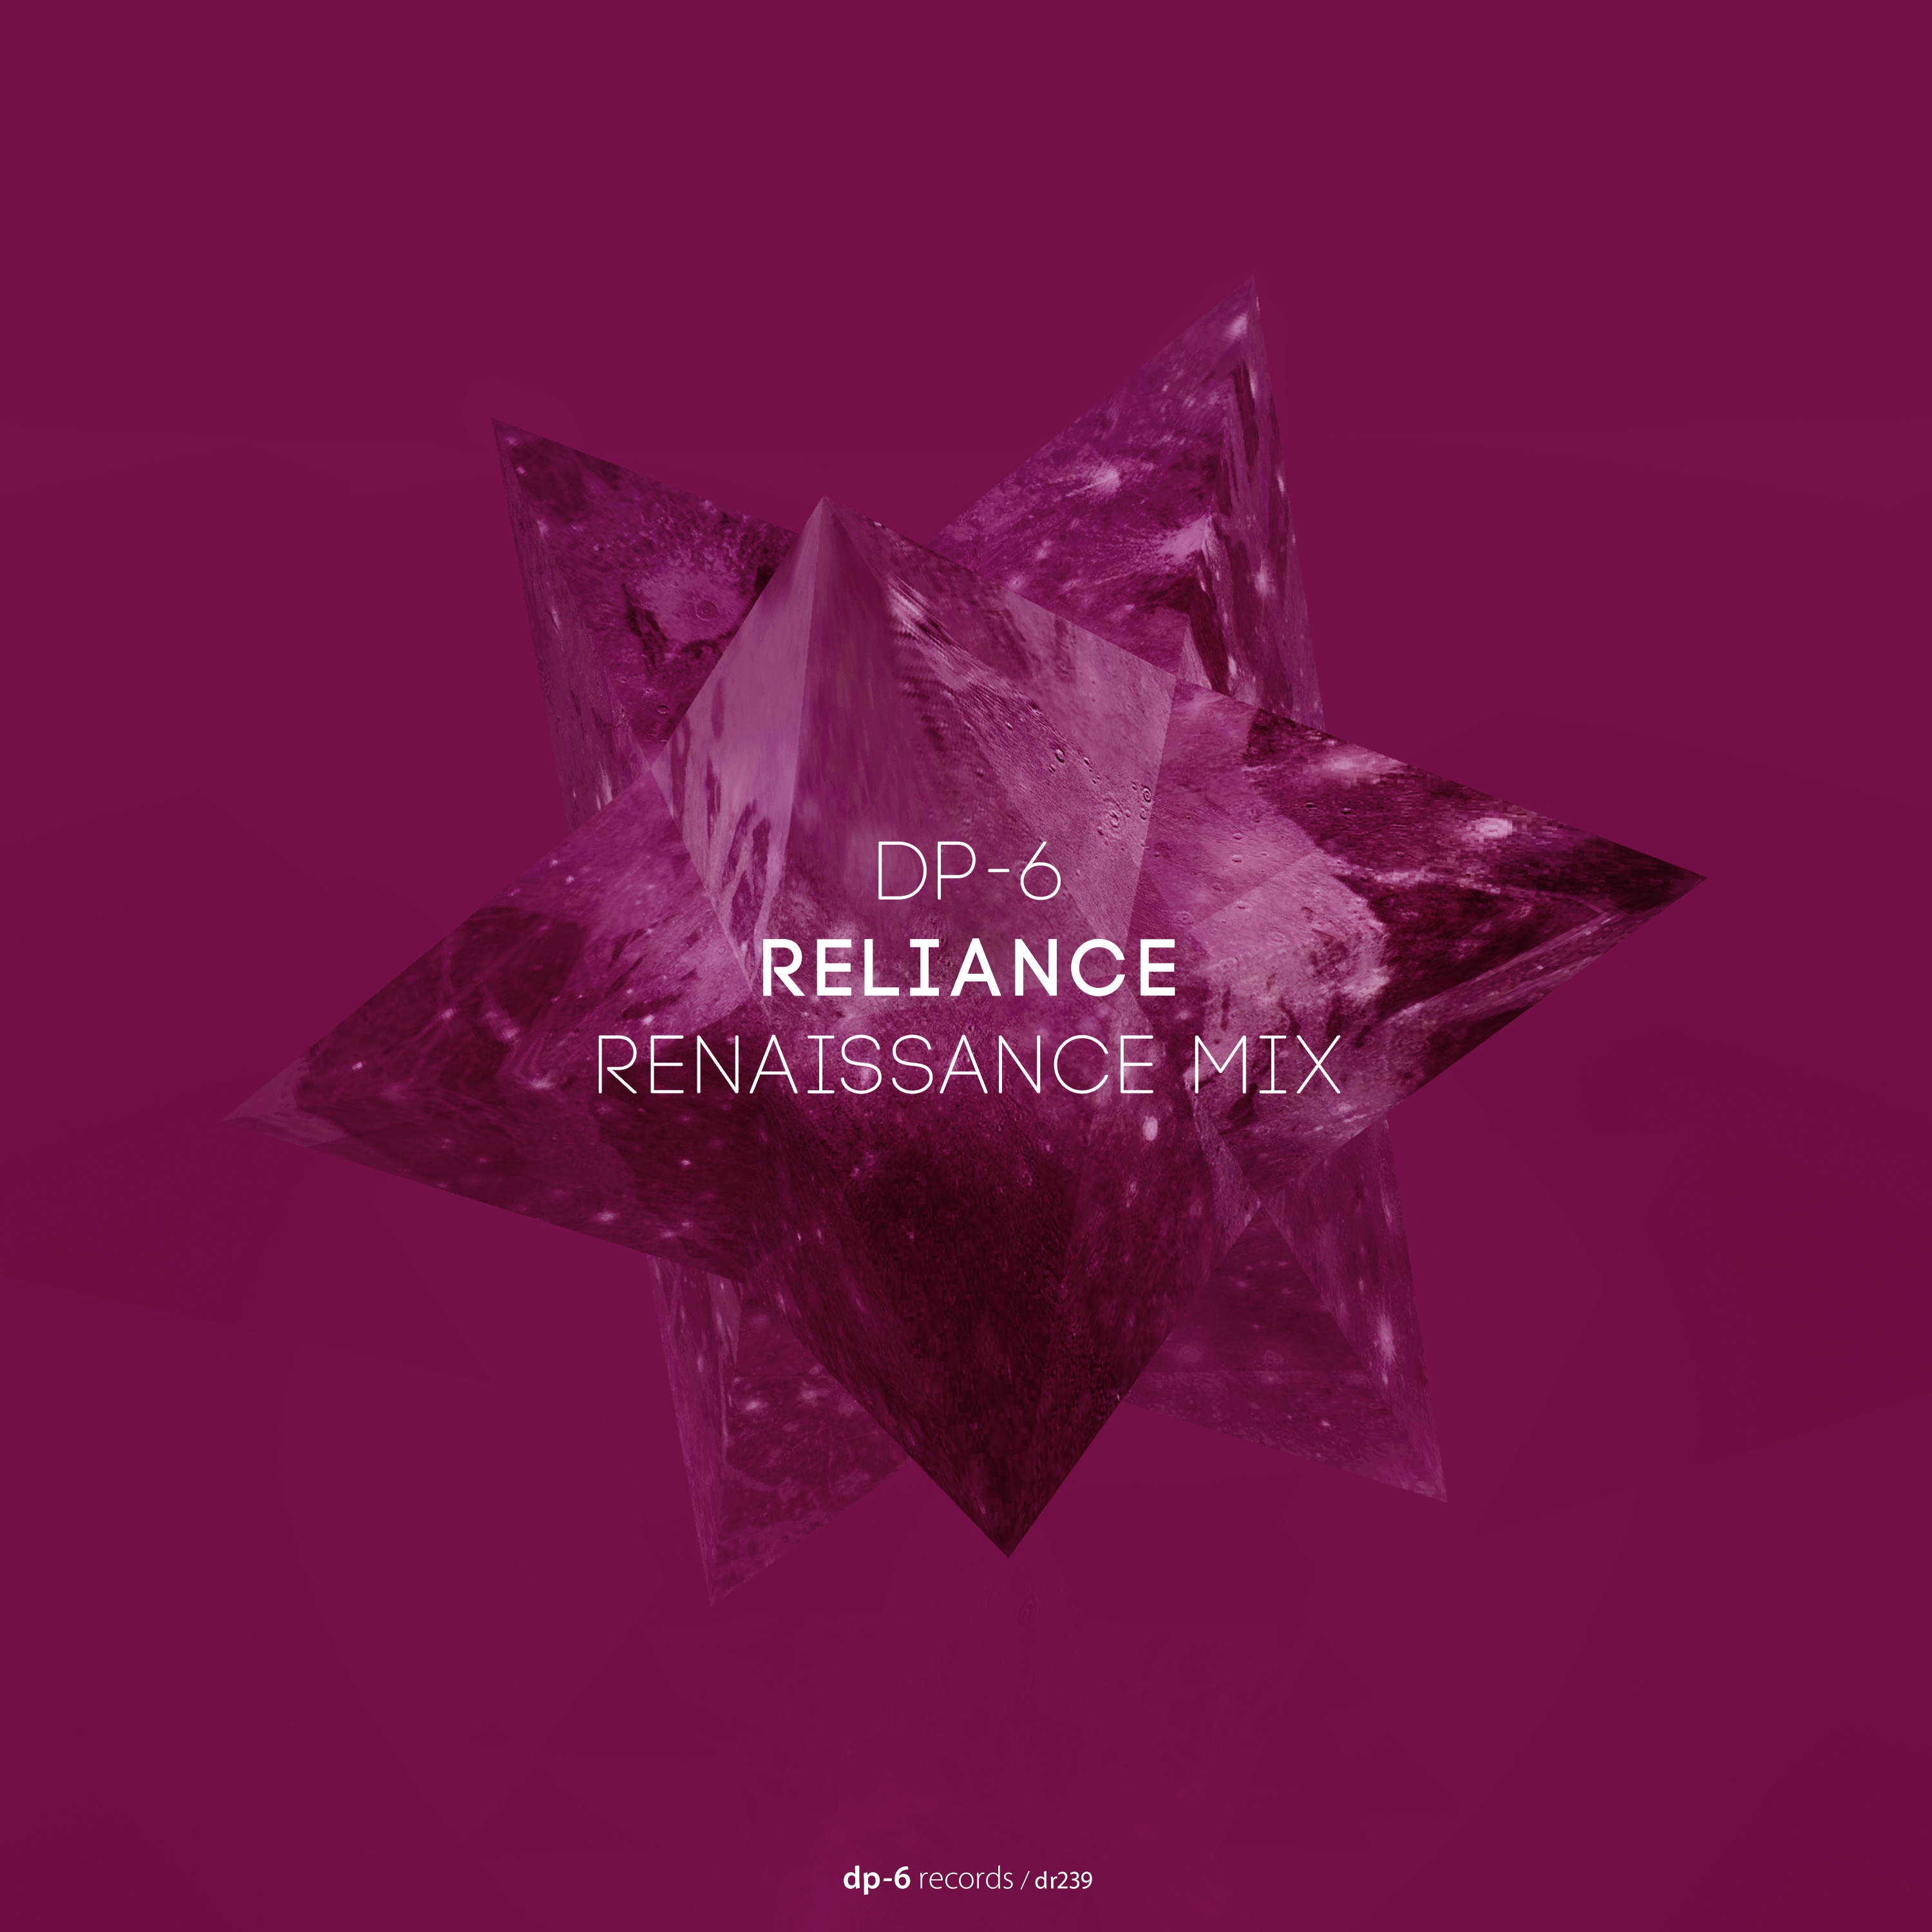 DP-6 - Reliance (Renaissance Mix)